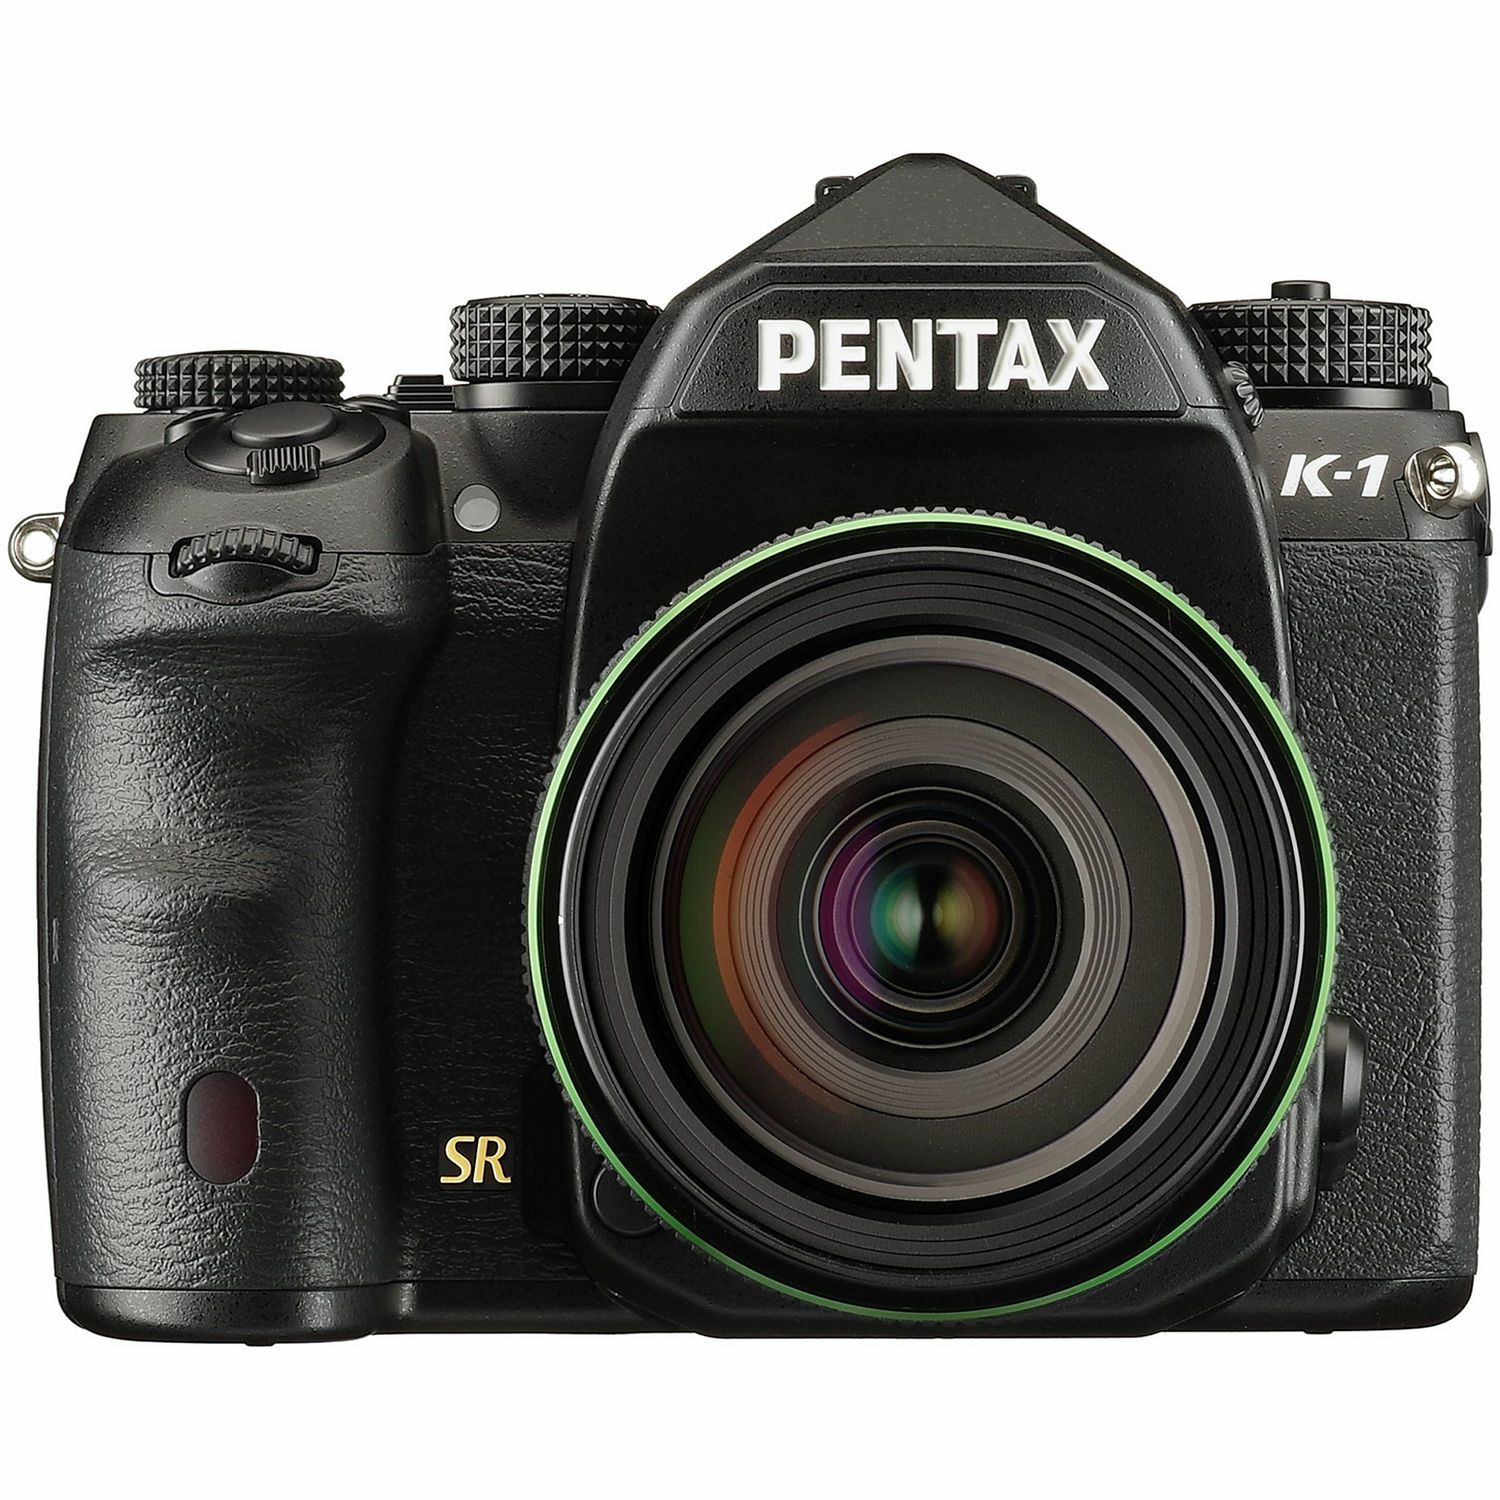 Pentax K-1 + 28-105mm f/3.5-5.6 ED DC WR Black KIT Full Frame DSLR Crni Digitalni fotoaparat D FA FA28-105/3.5-5.6 28-105 3.5-5.6 (19582)